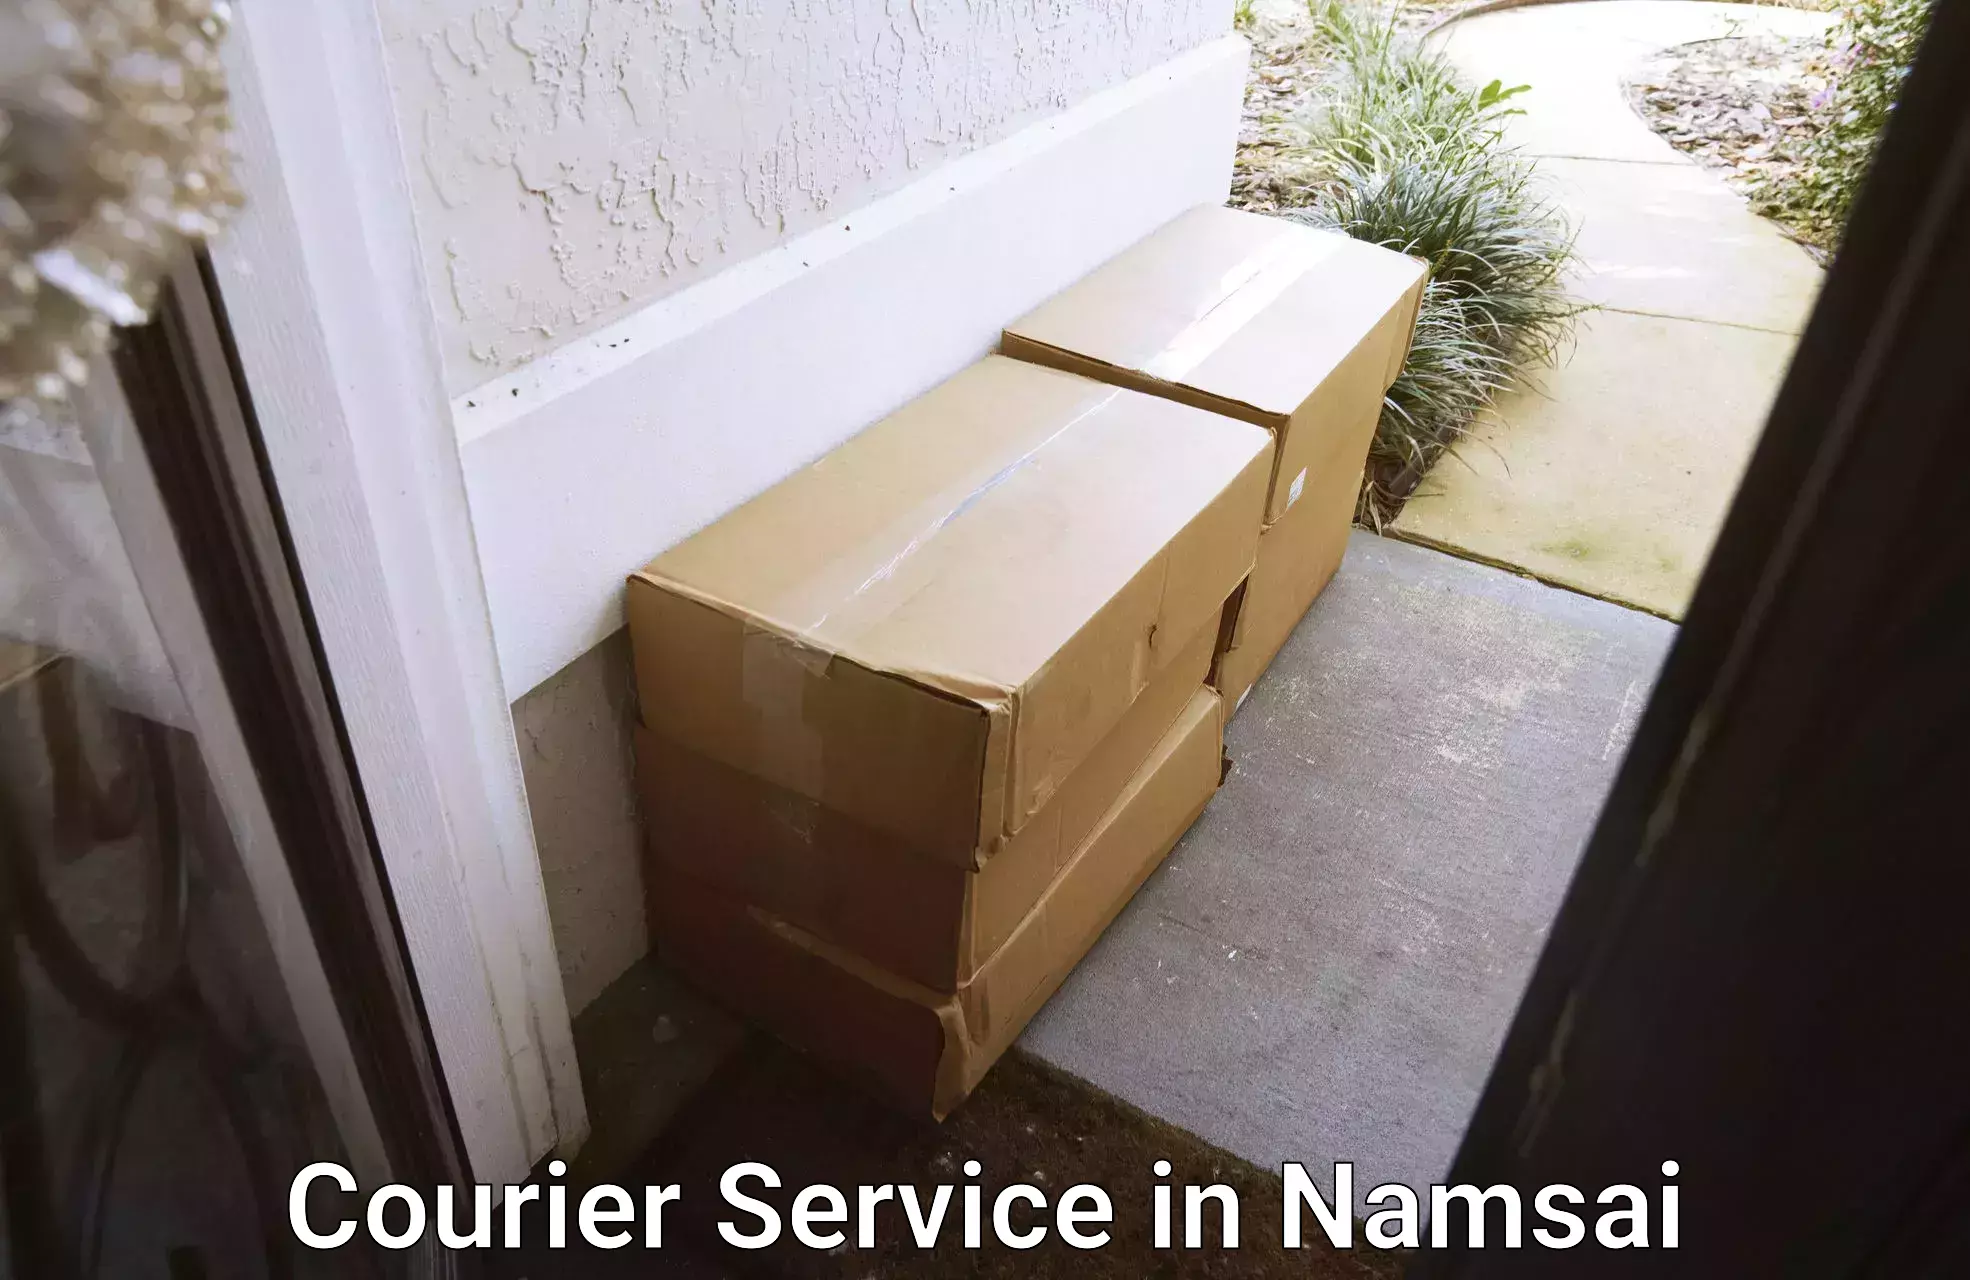 Enhanced shipping experience in Namsai